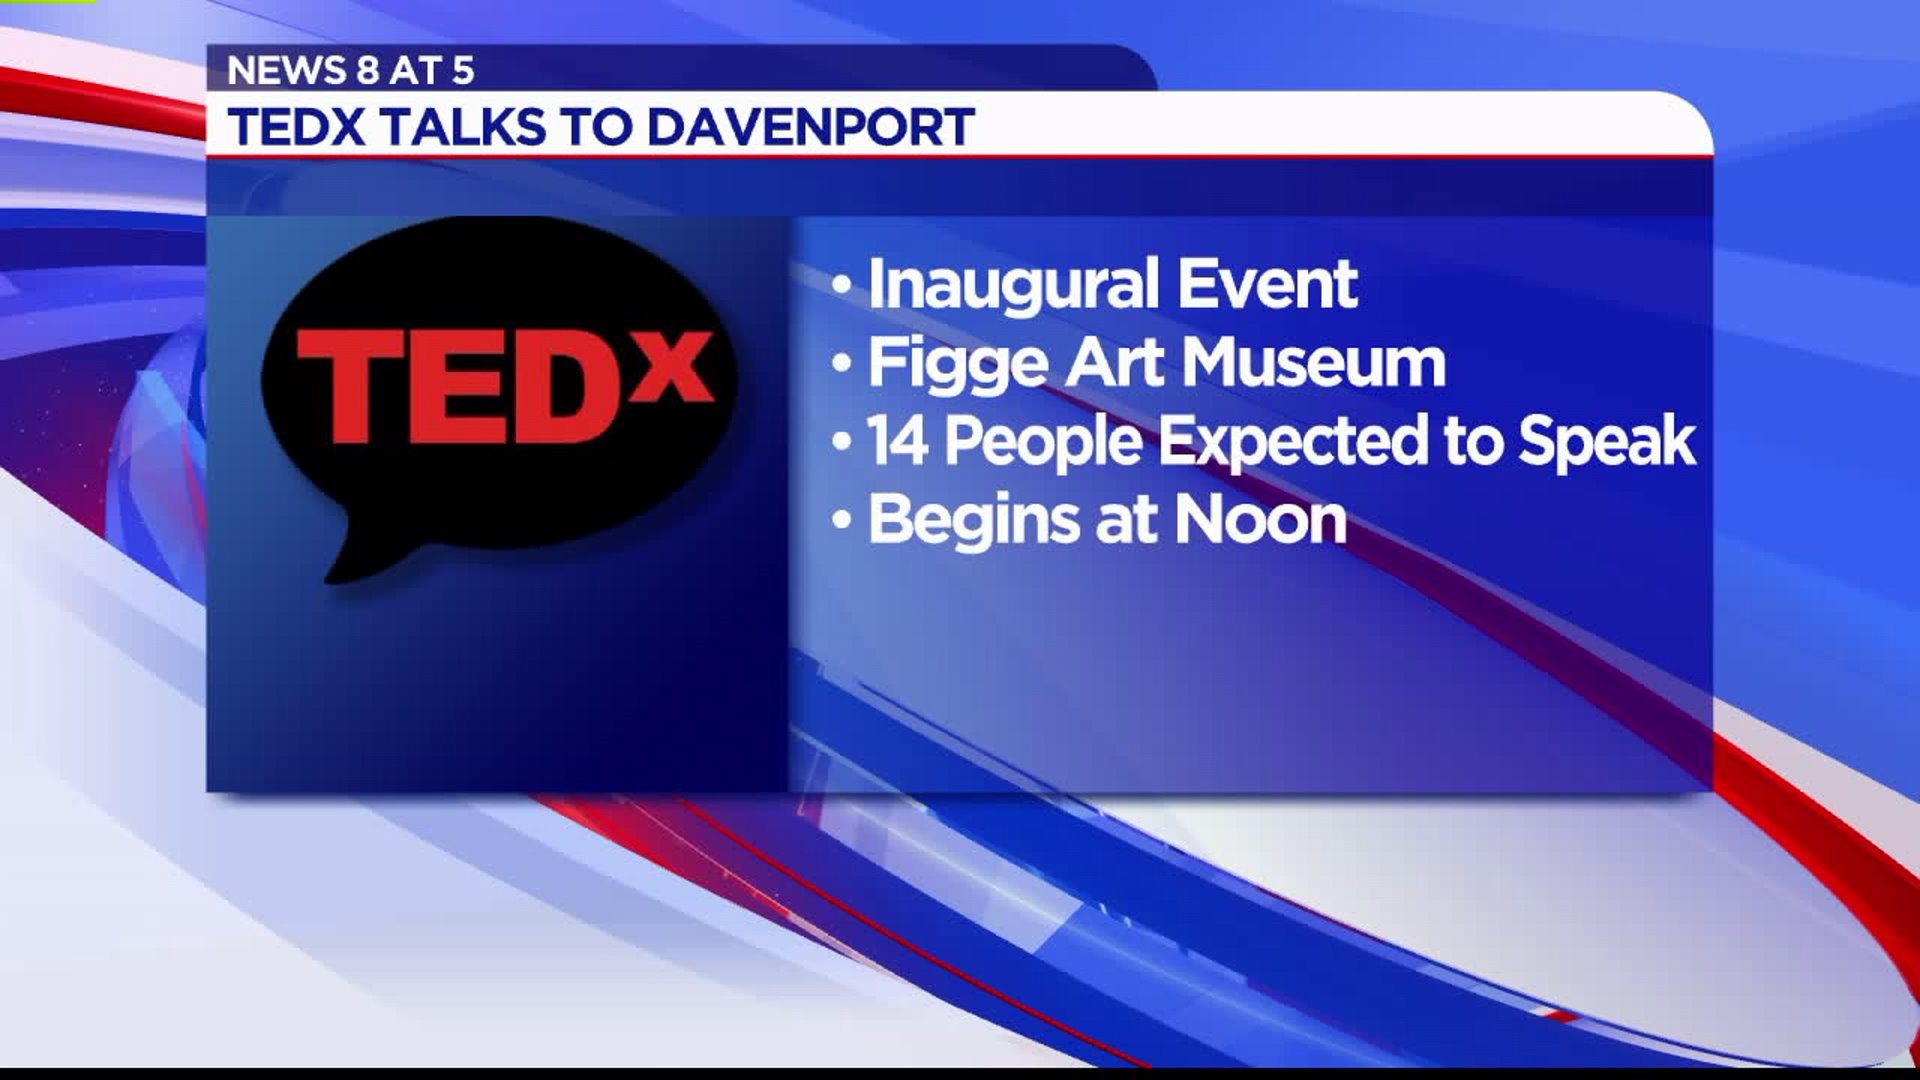 TEDX coming to Davenport